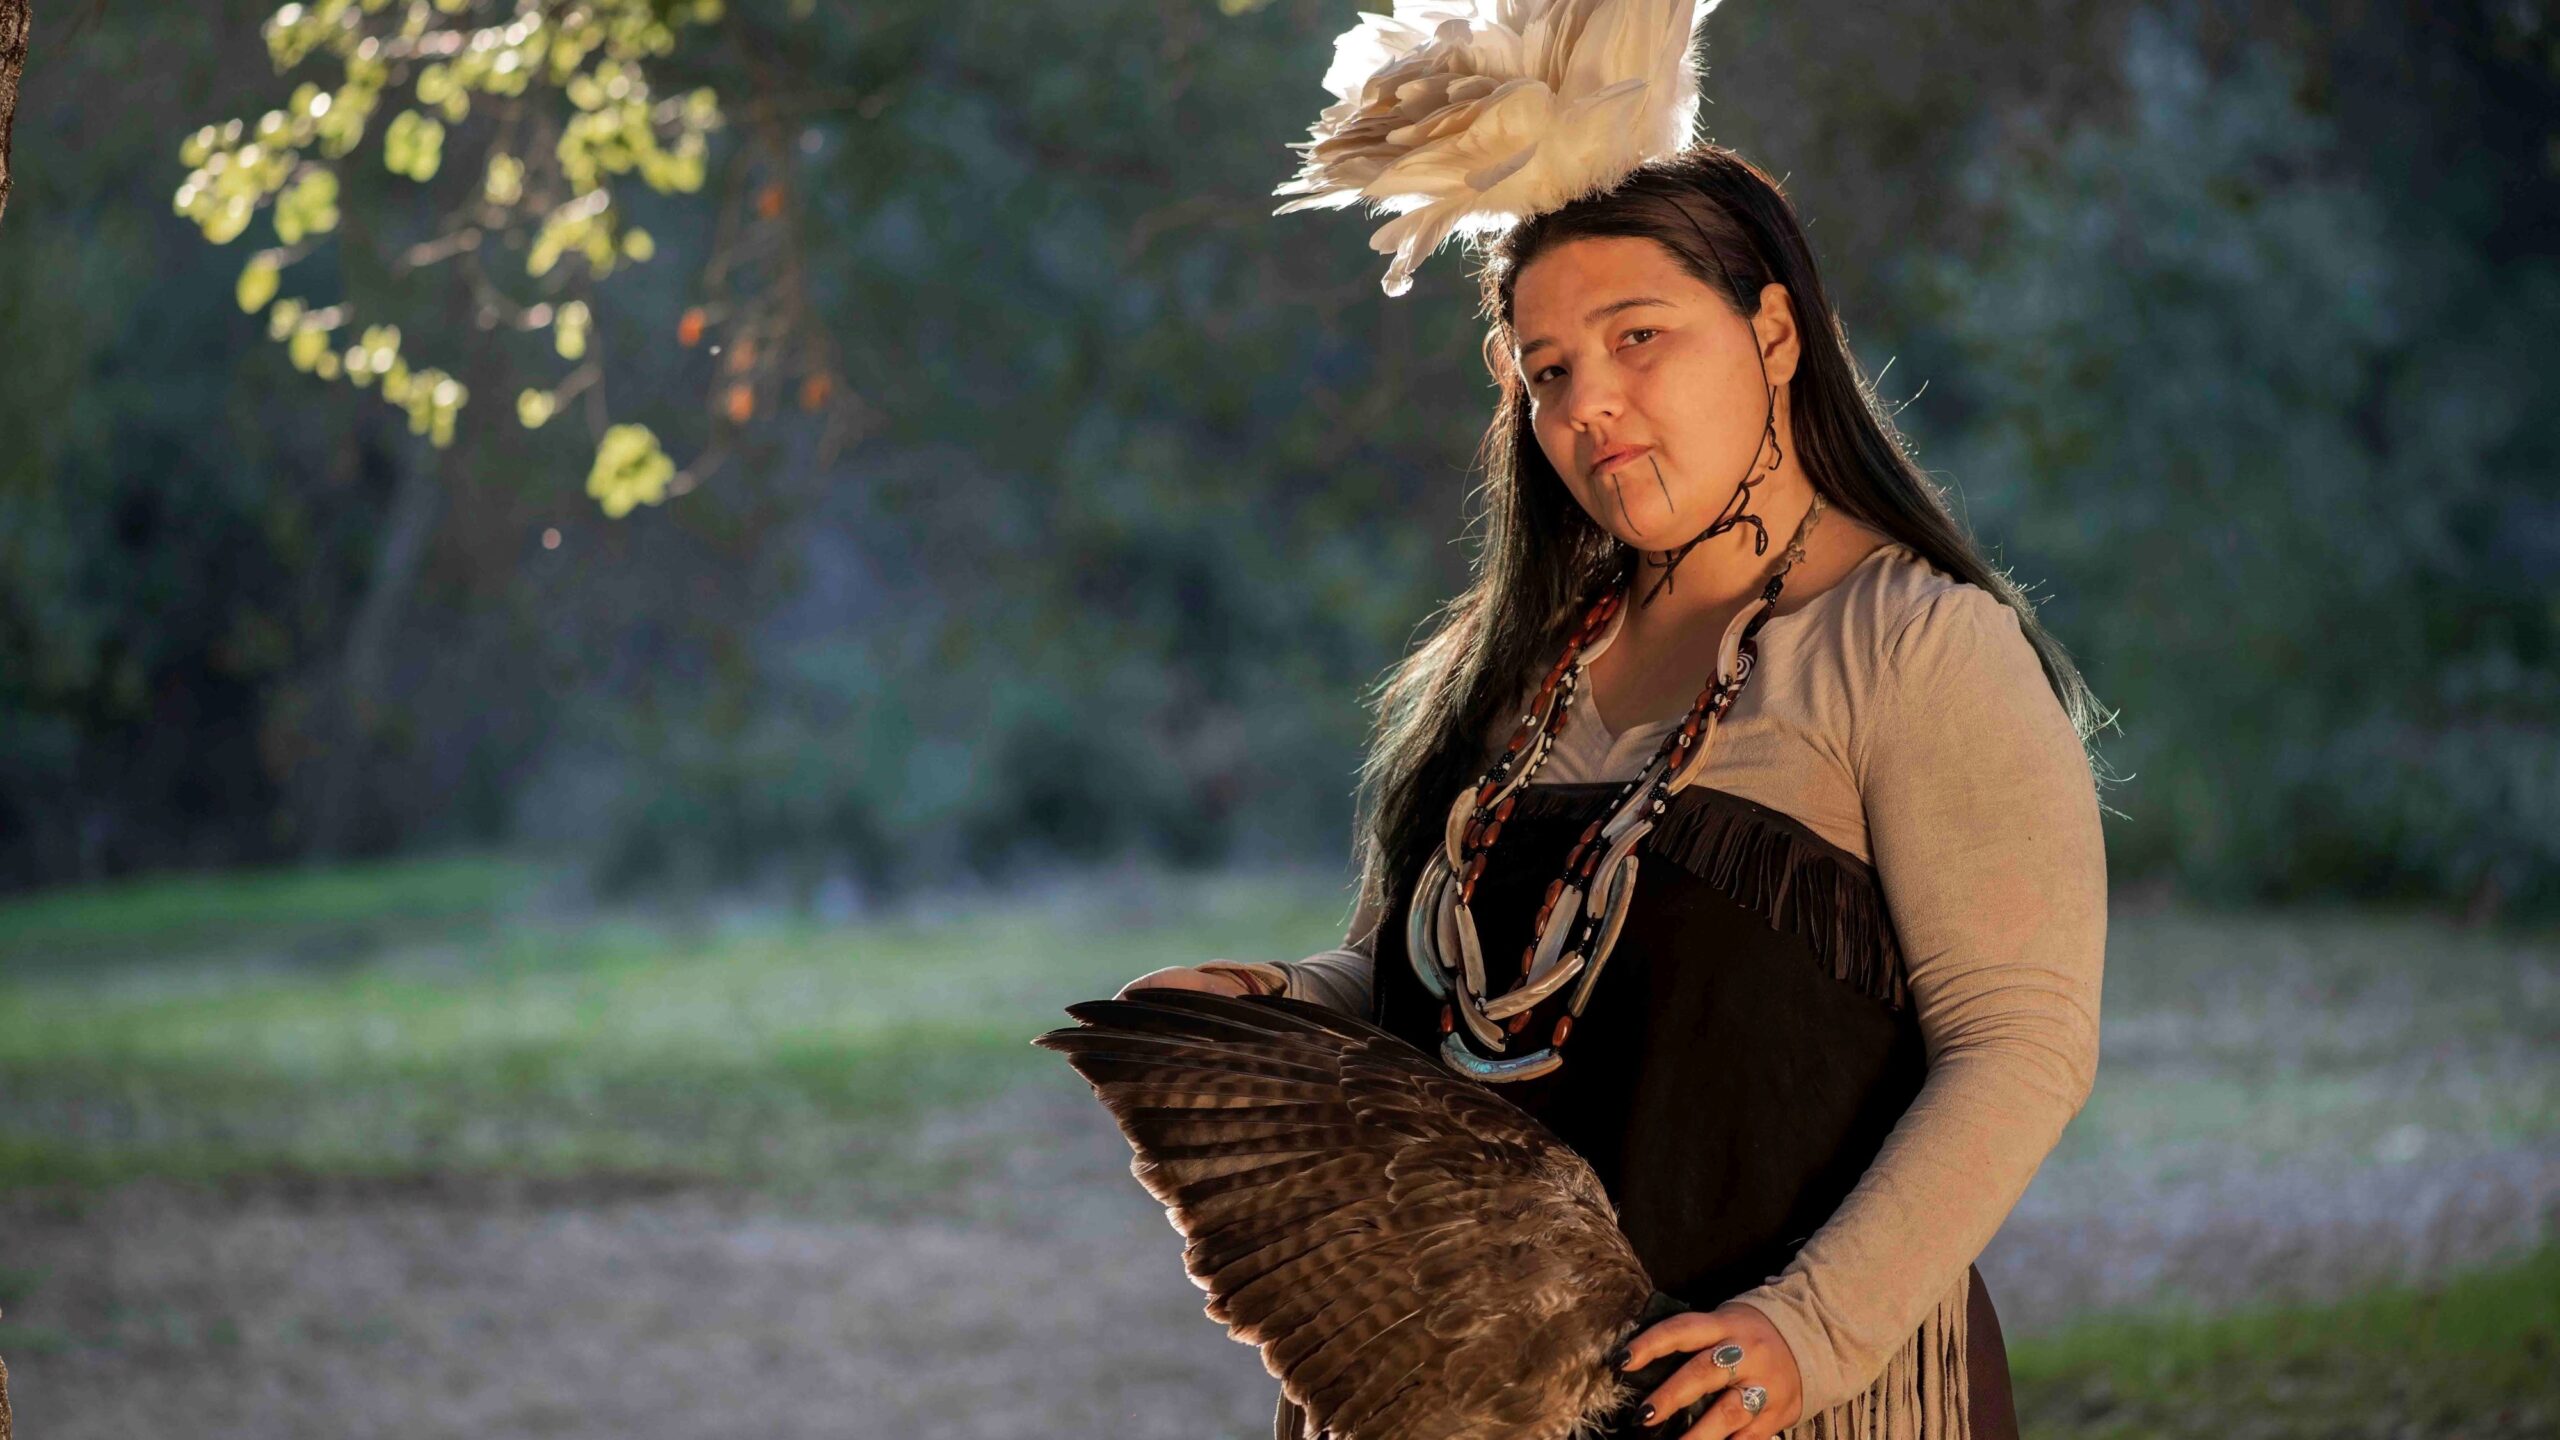 Photograph by Kirti Bassendine, Kanyon Sayers Roods- Indian Canyon Nation- ICN Tribal Chairwoman and CIR President